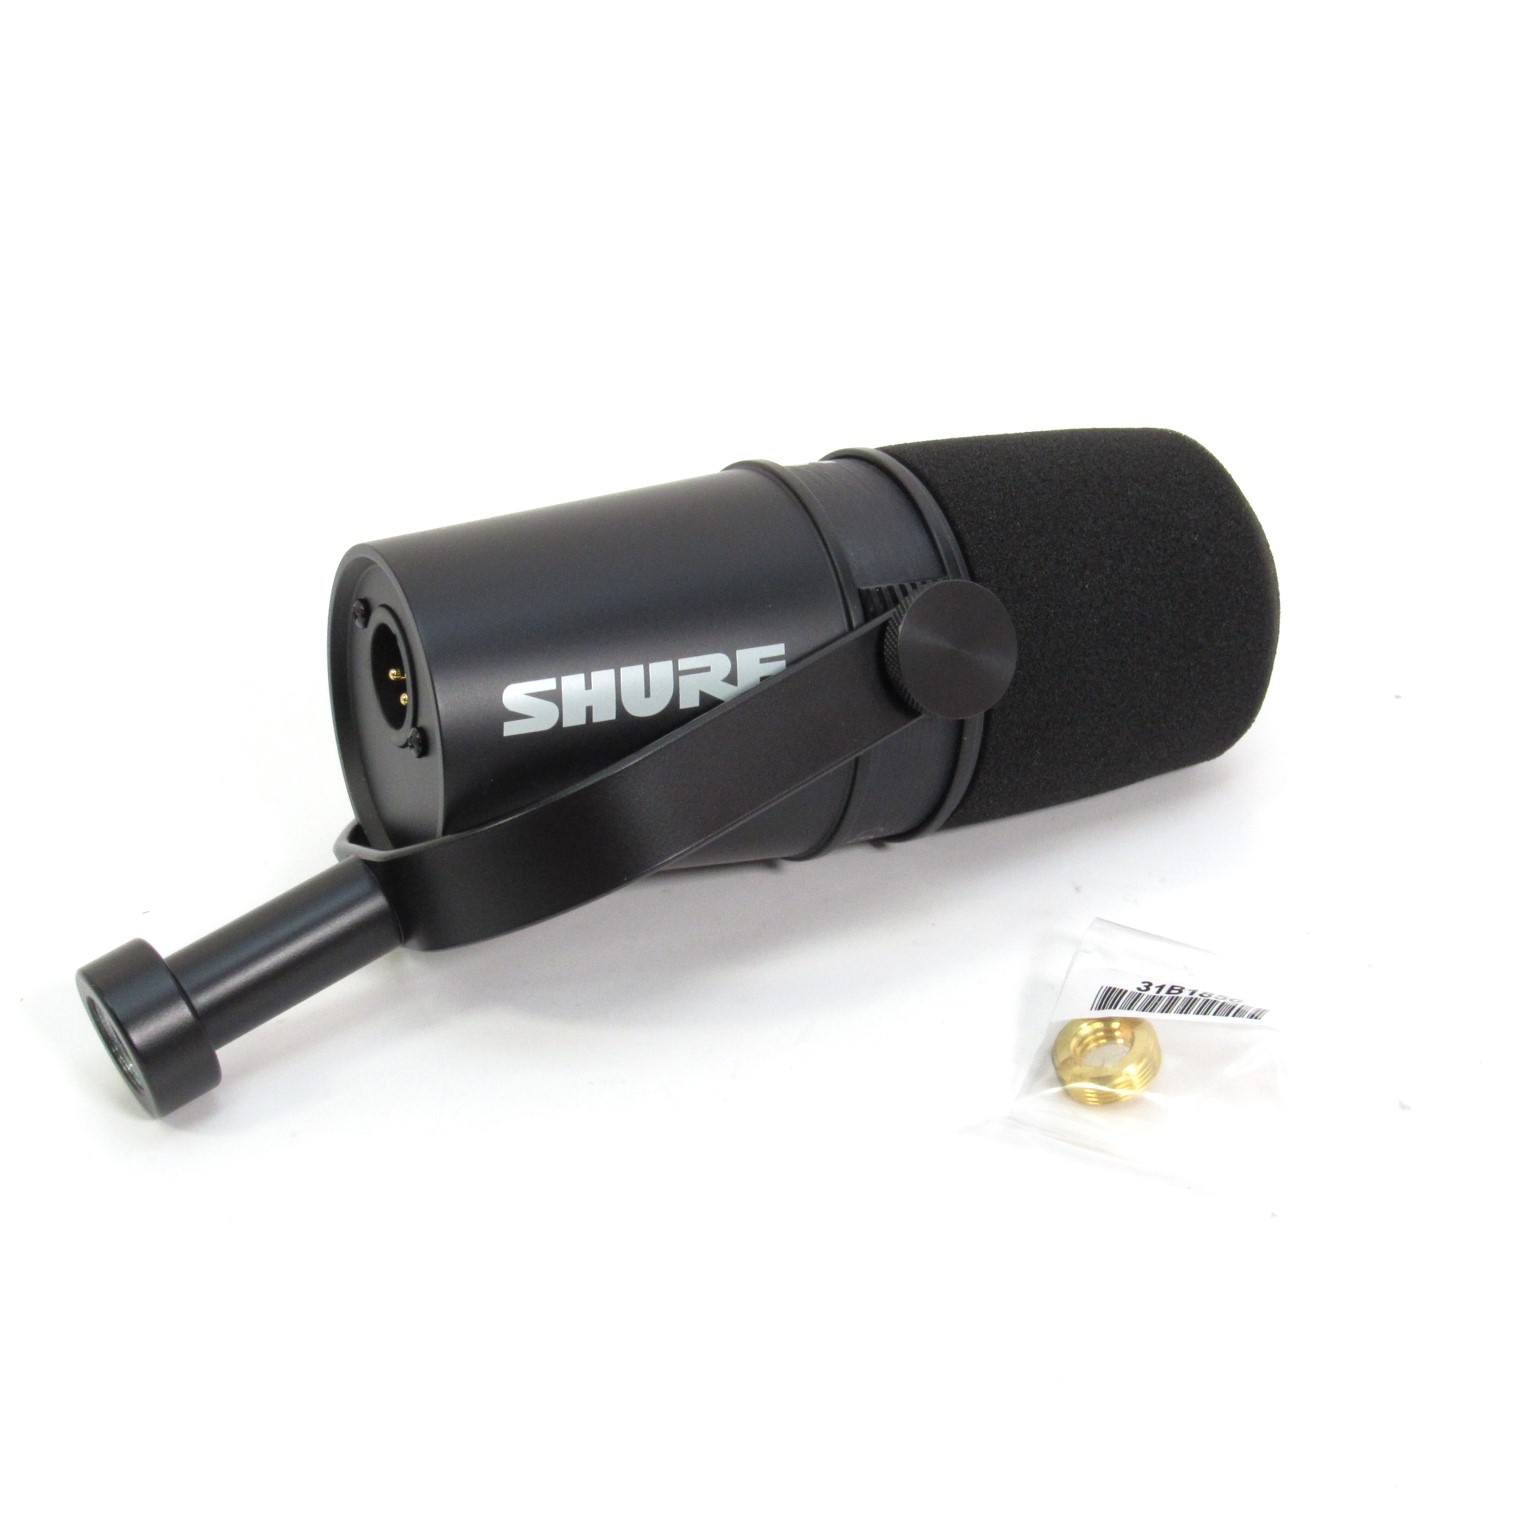 Shure MV7X XLR Dynamic Podcast Microphone - Black